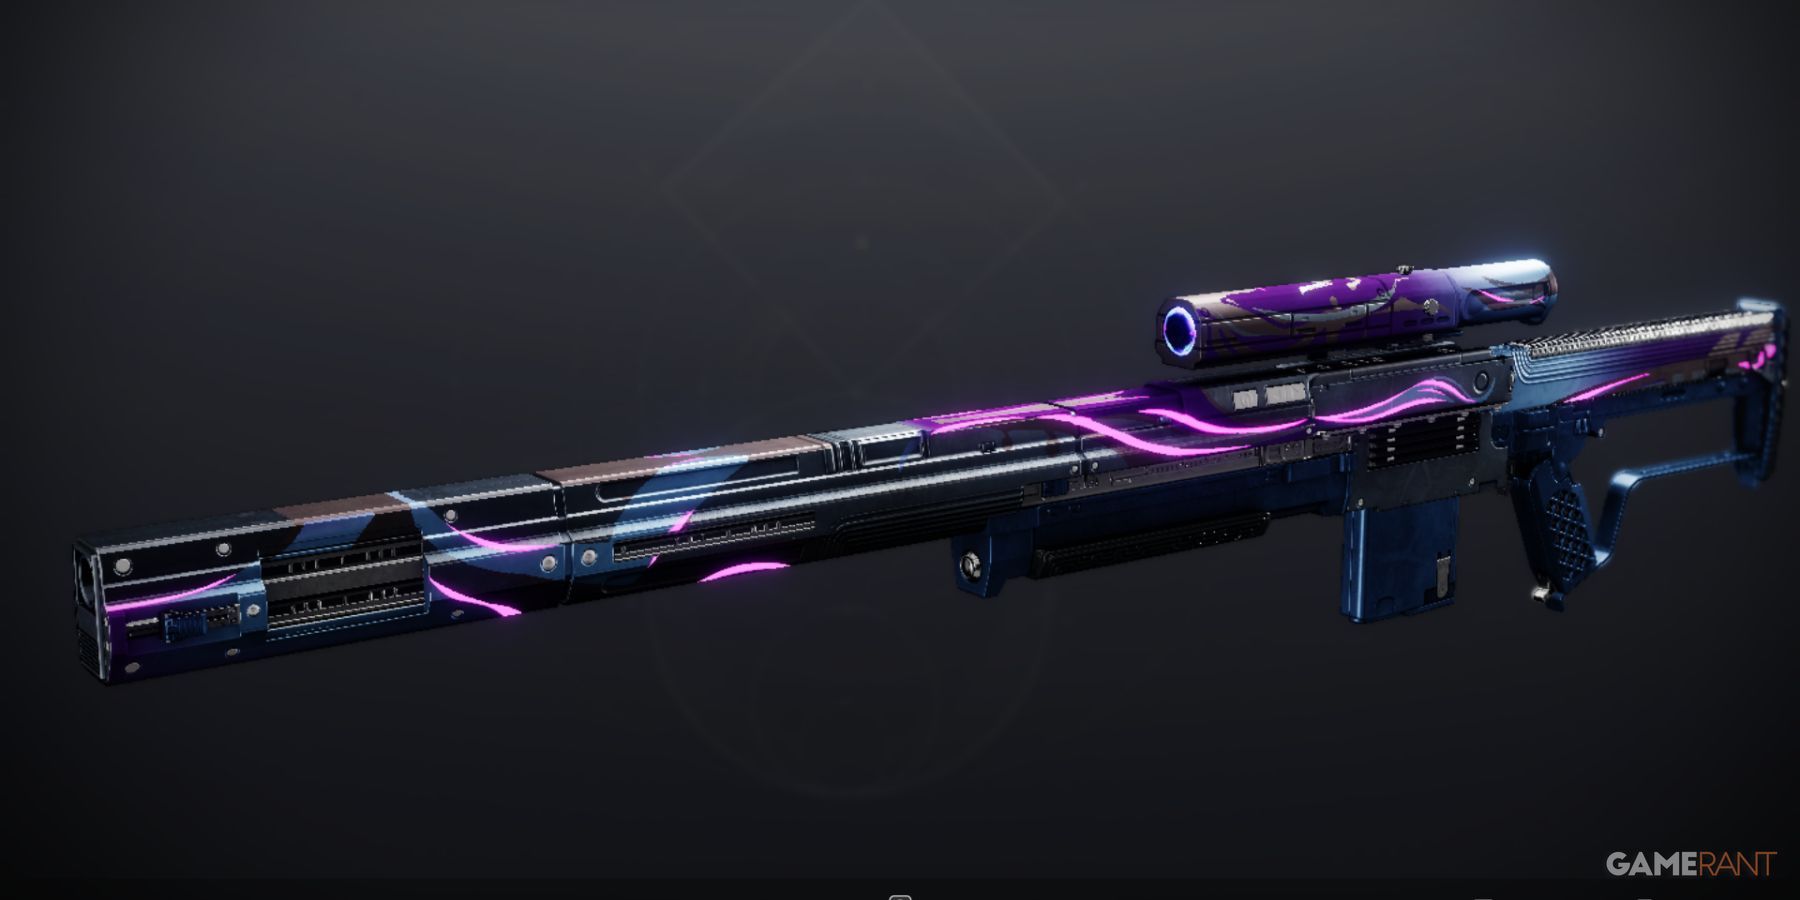 Destiny 2 Volta Bracket Sniper Rifle